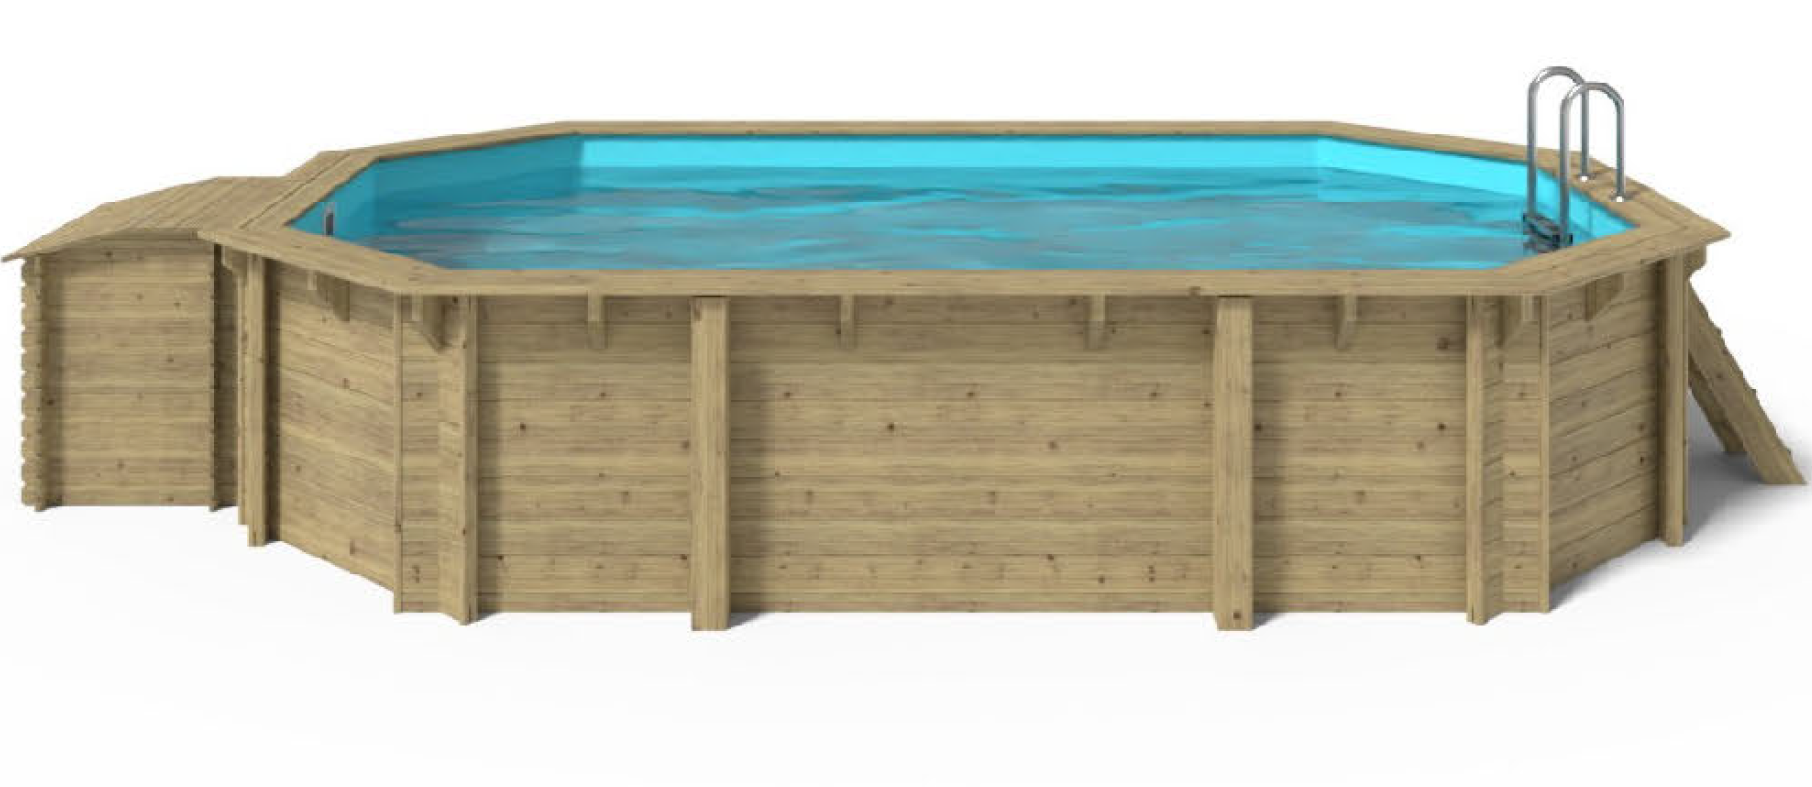 Raised/Inground Swimming Pool - Wood (Oval) Gozo - 5,86 x 3,86 x 1,2m